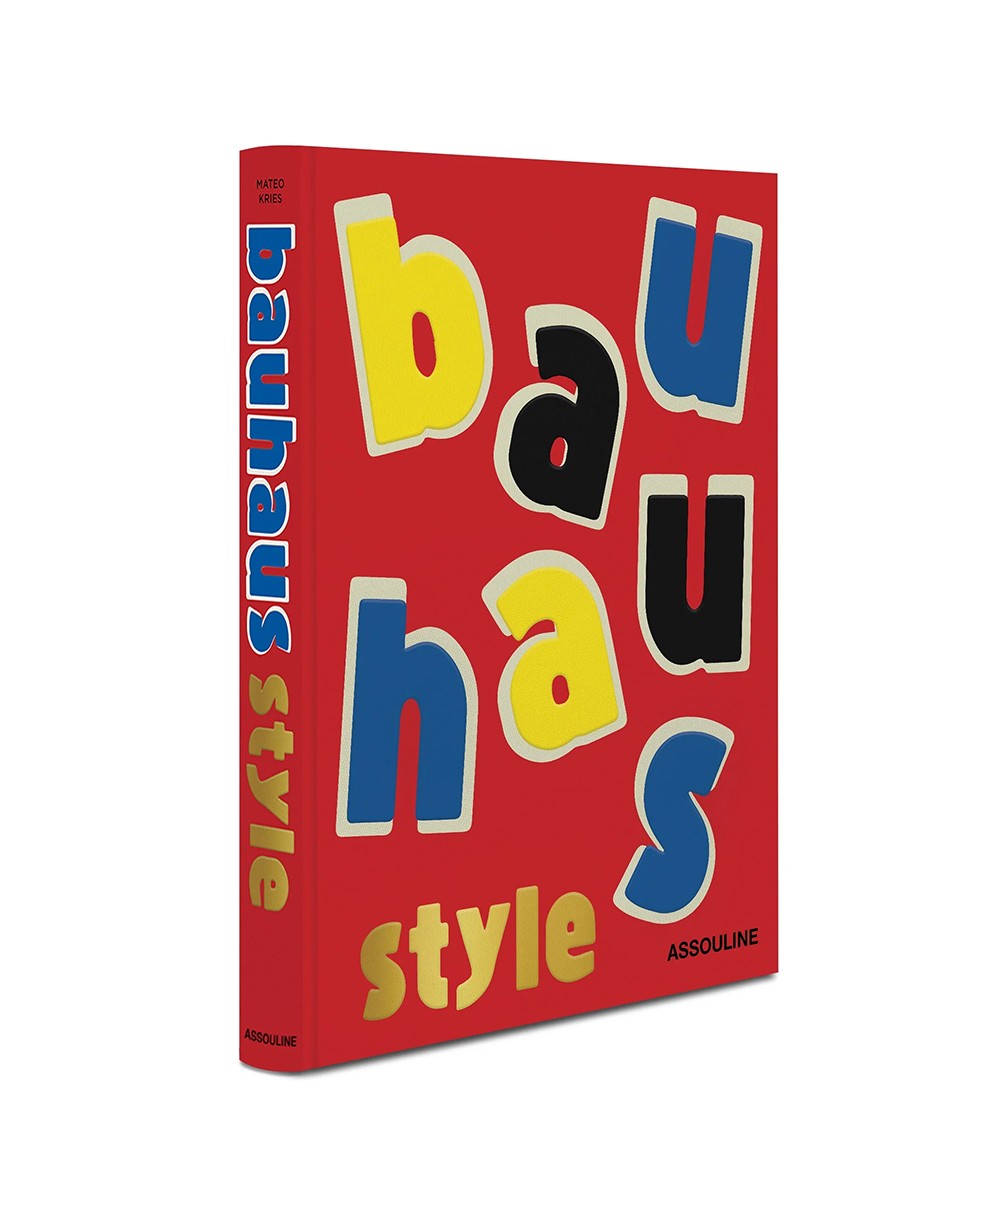 Cover des Coffee Table Books „Bauhaus Style“ von Assouline im RAUM concept store 